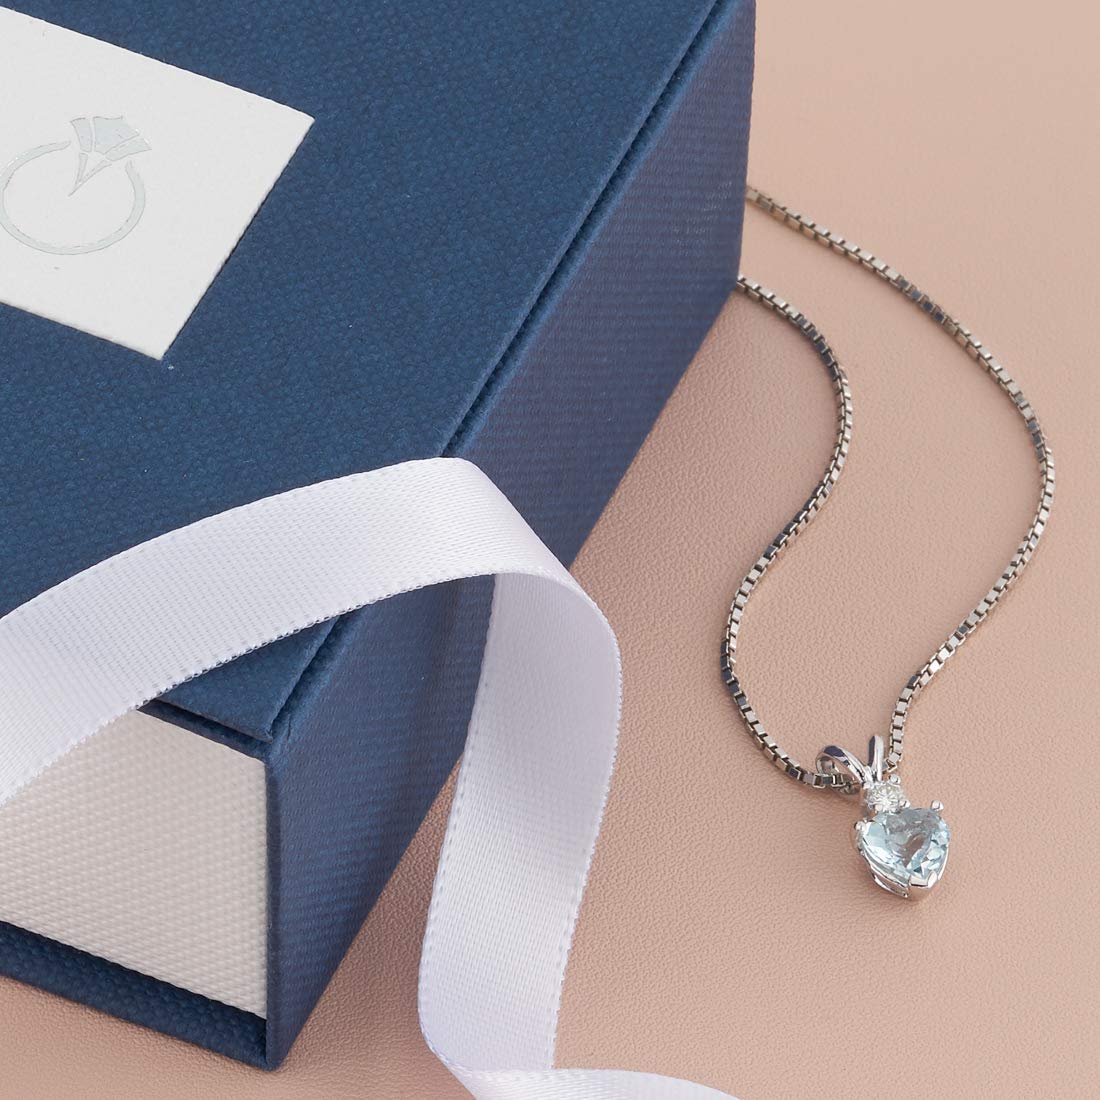 Peora Aquamarine with Diamond Pendant 14K White Gold, Heart Shape Solitaire, 6mm, 0.75 Carat total